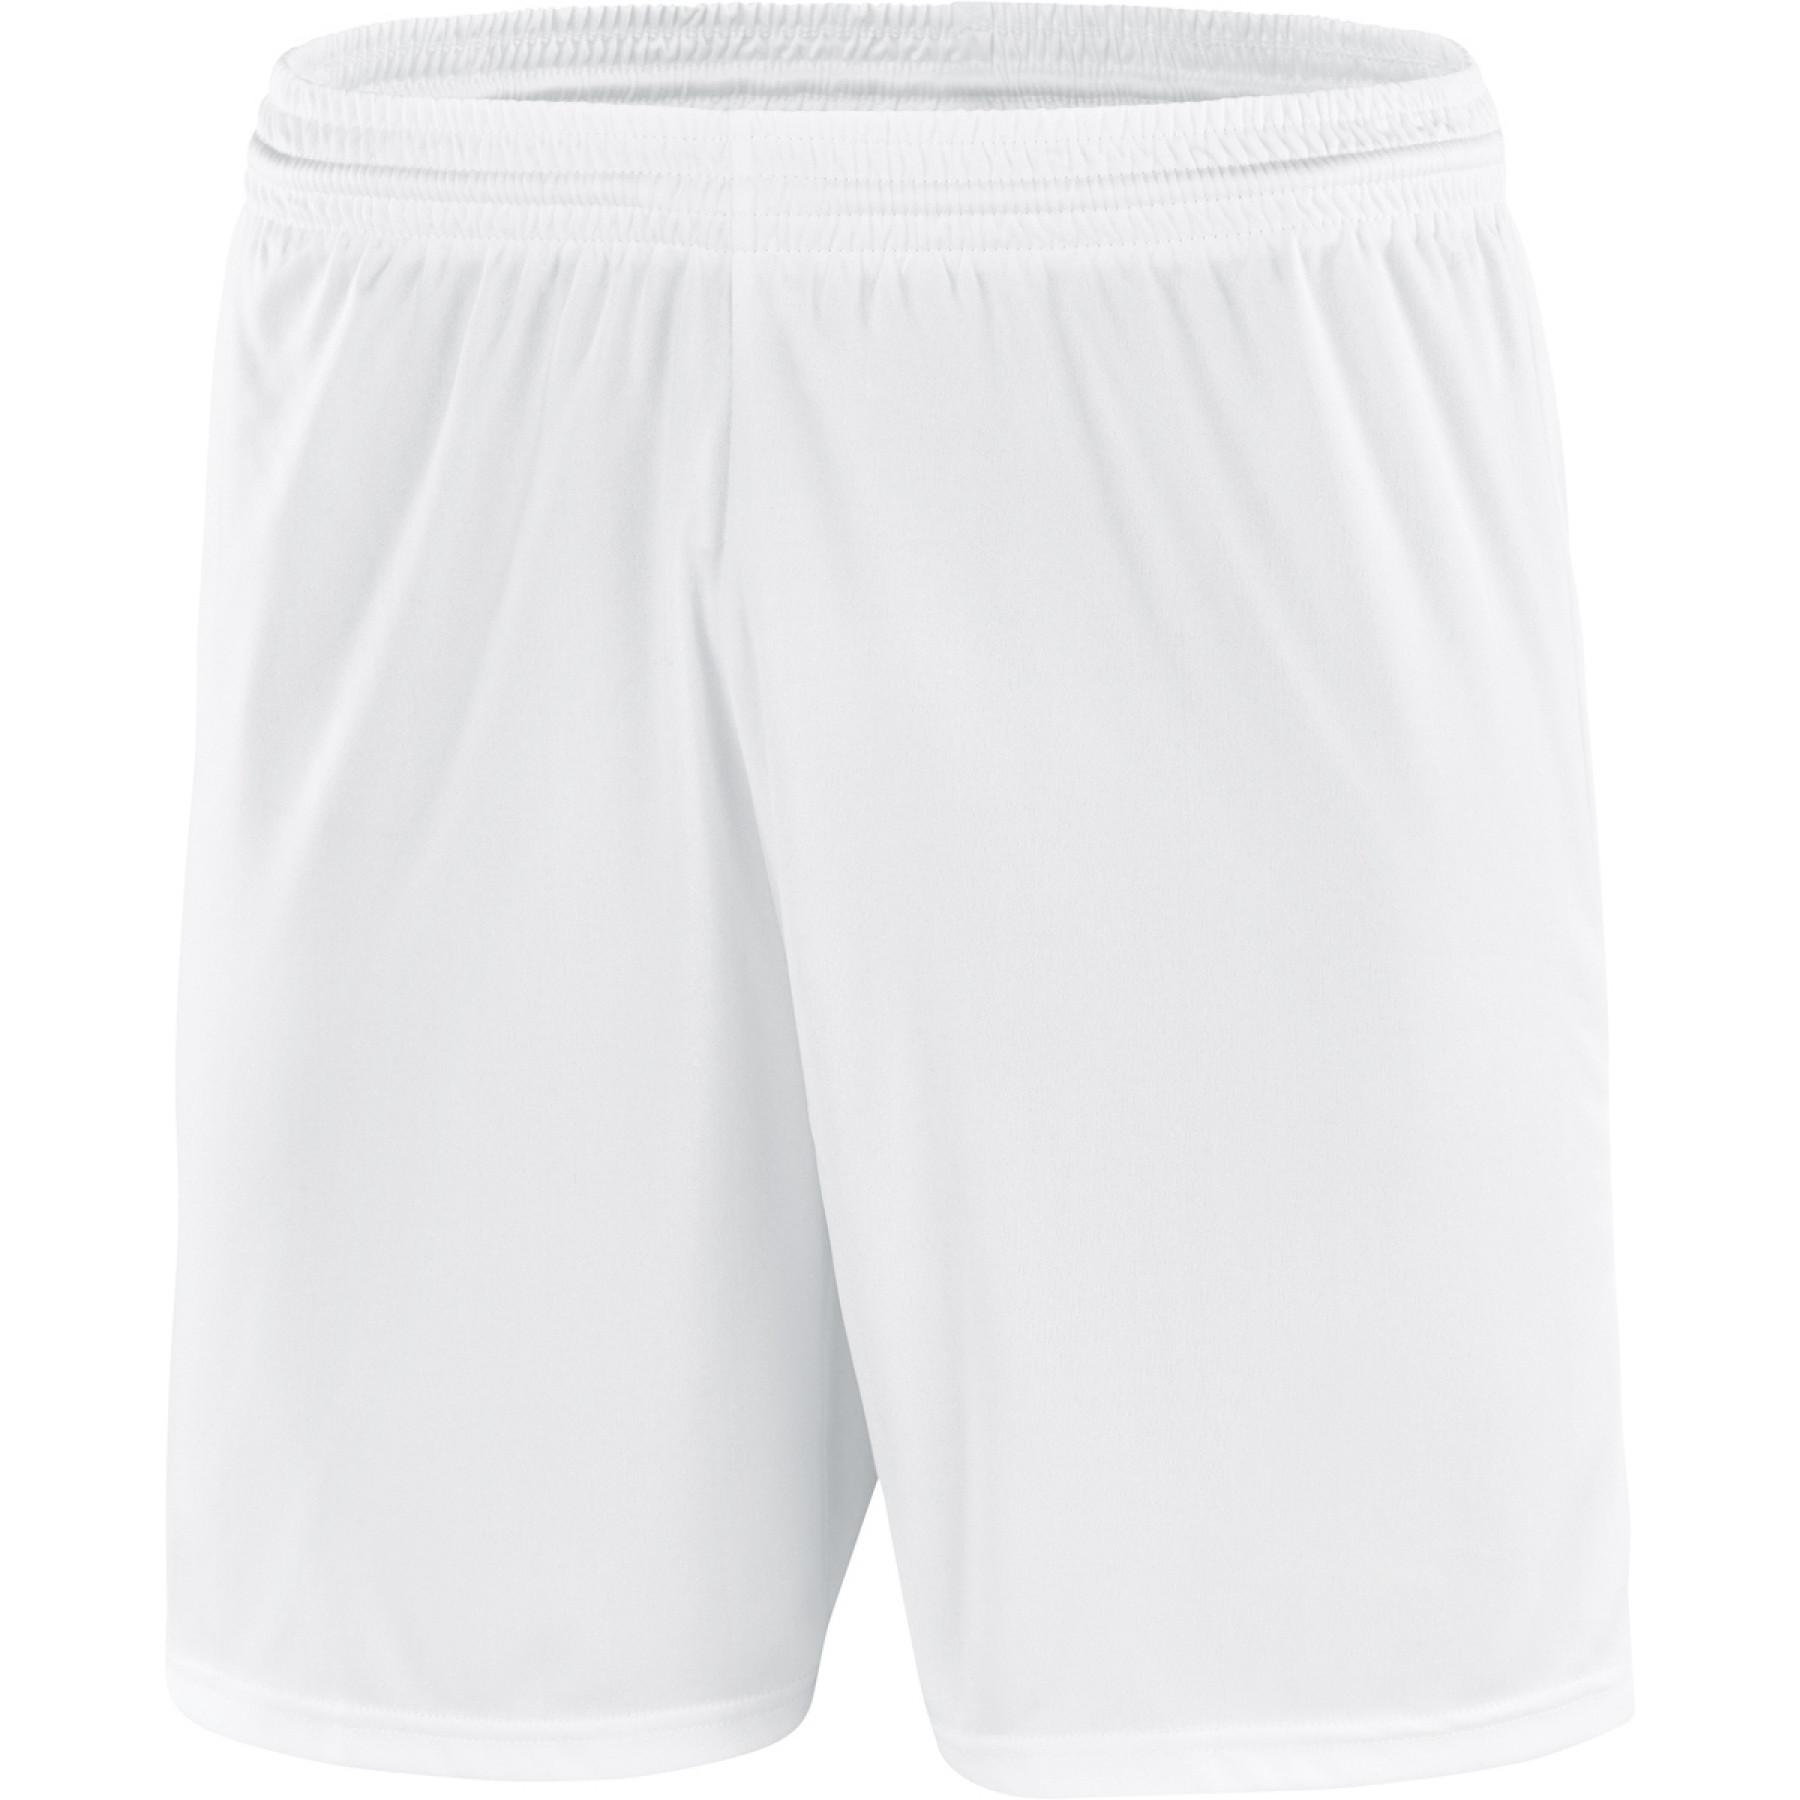 Valencia junior shorts